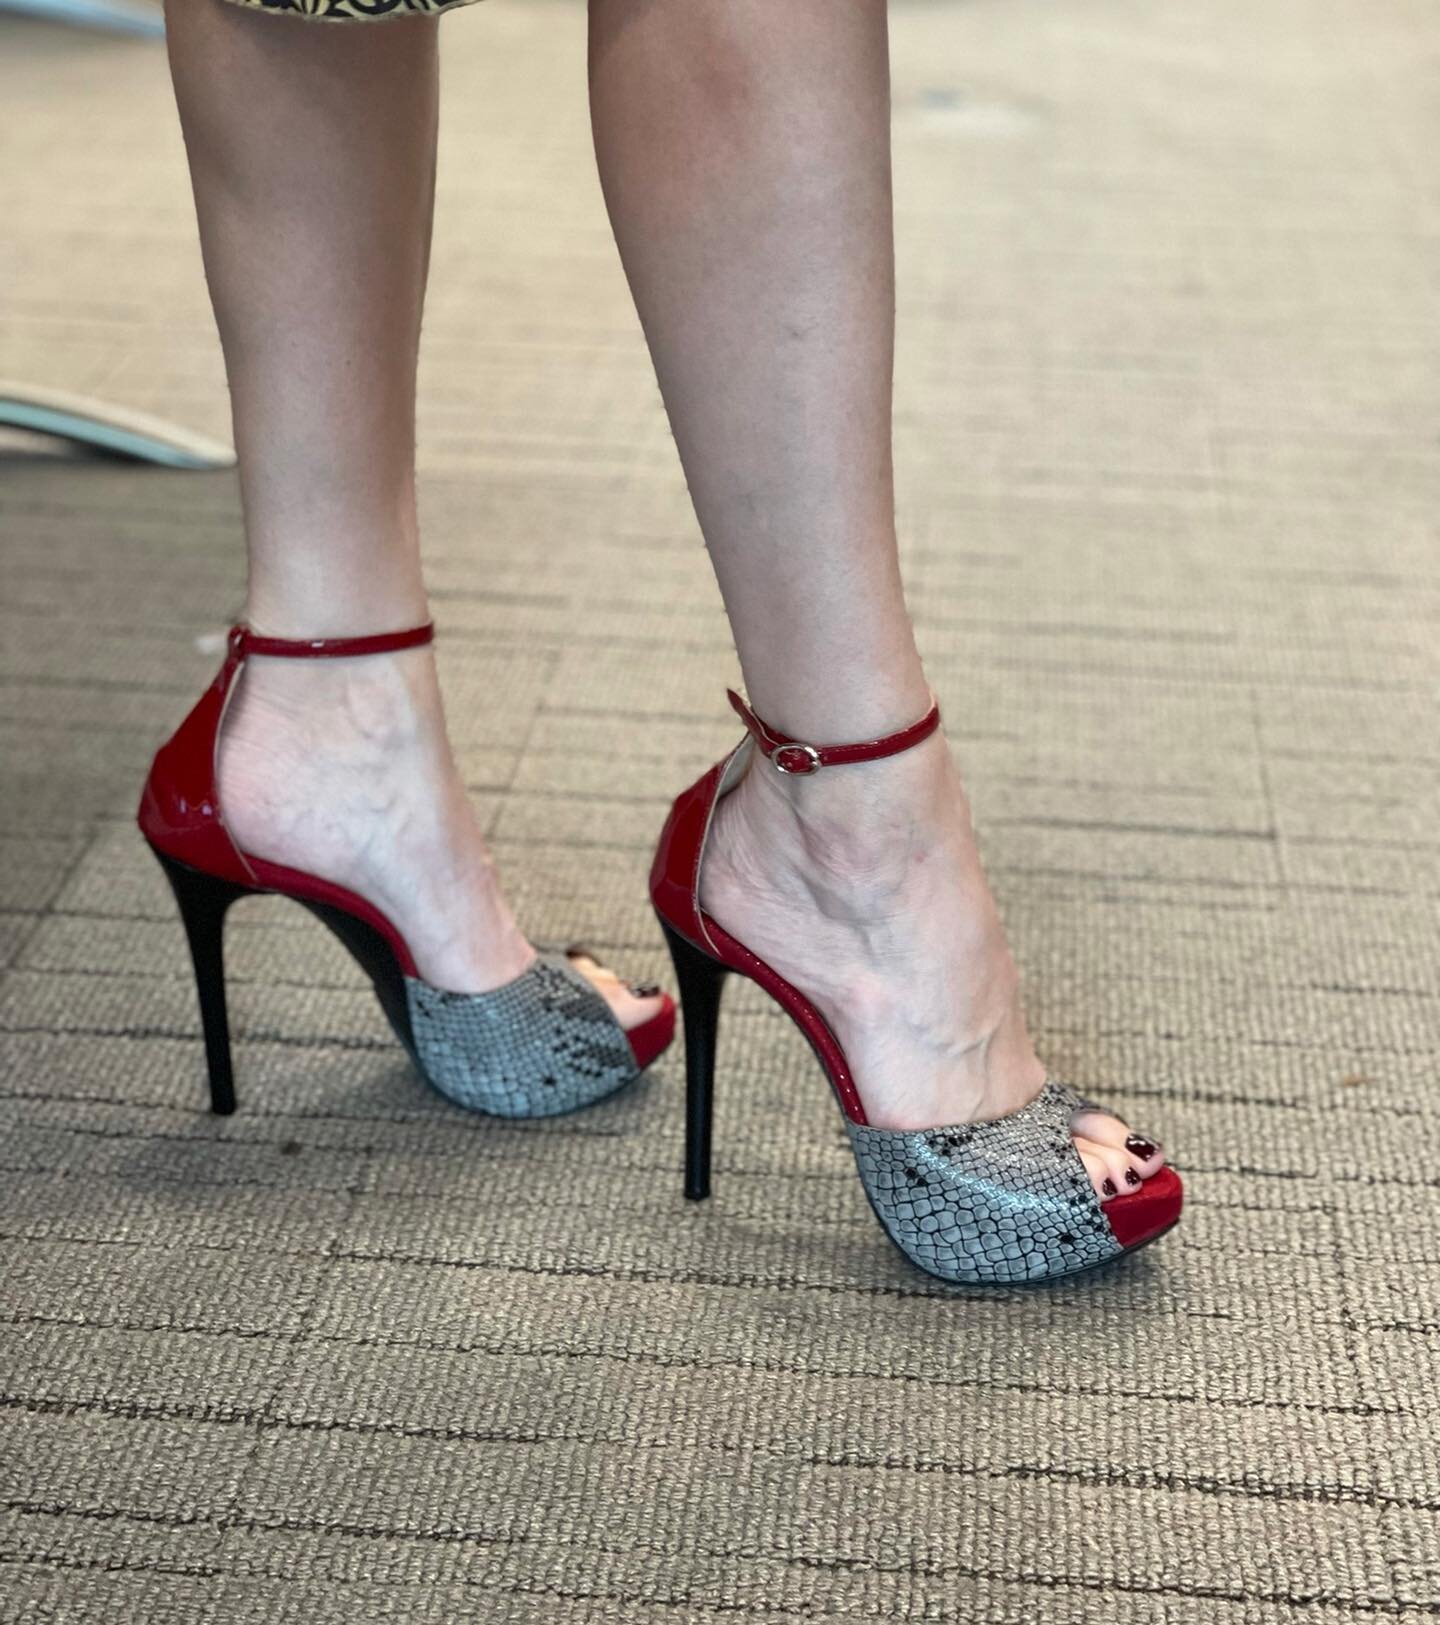 High-heeled shoe - Wikipedia